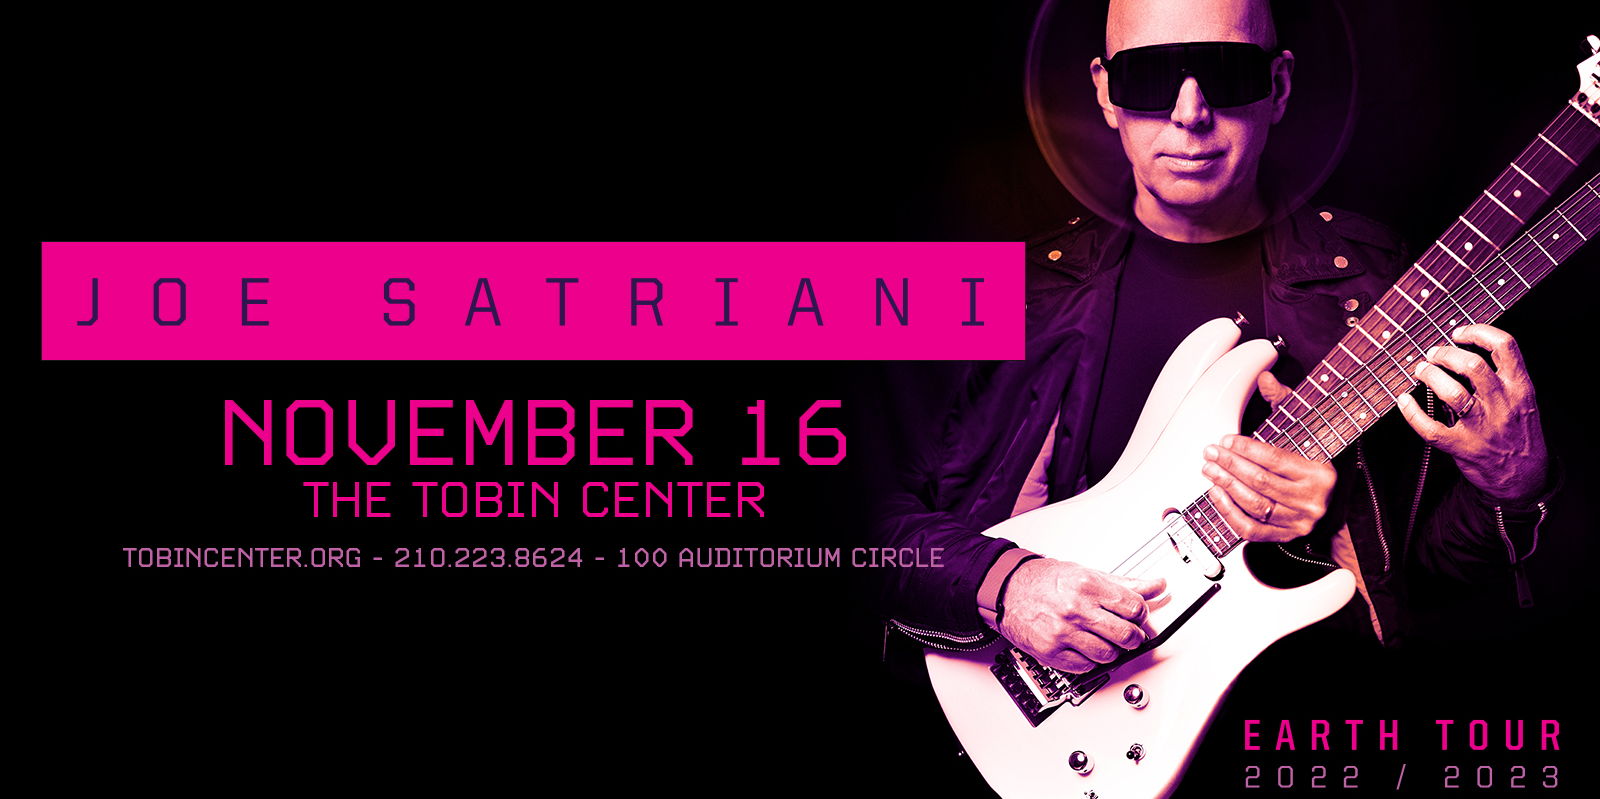 Joe Satriani  promotional image